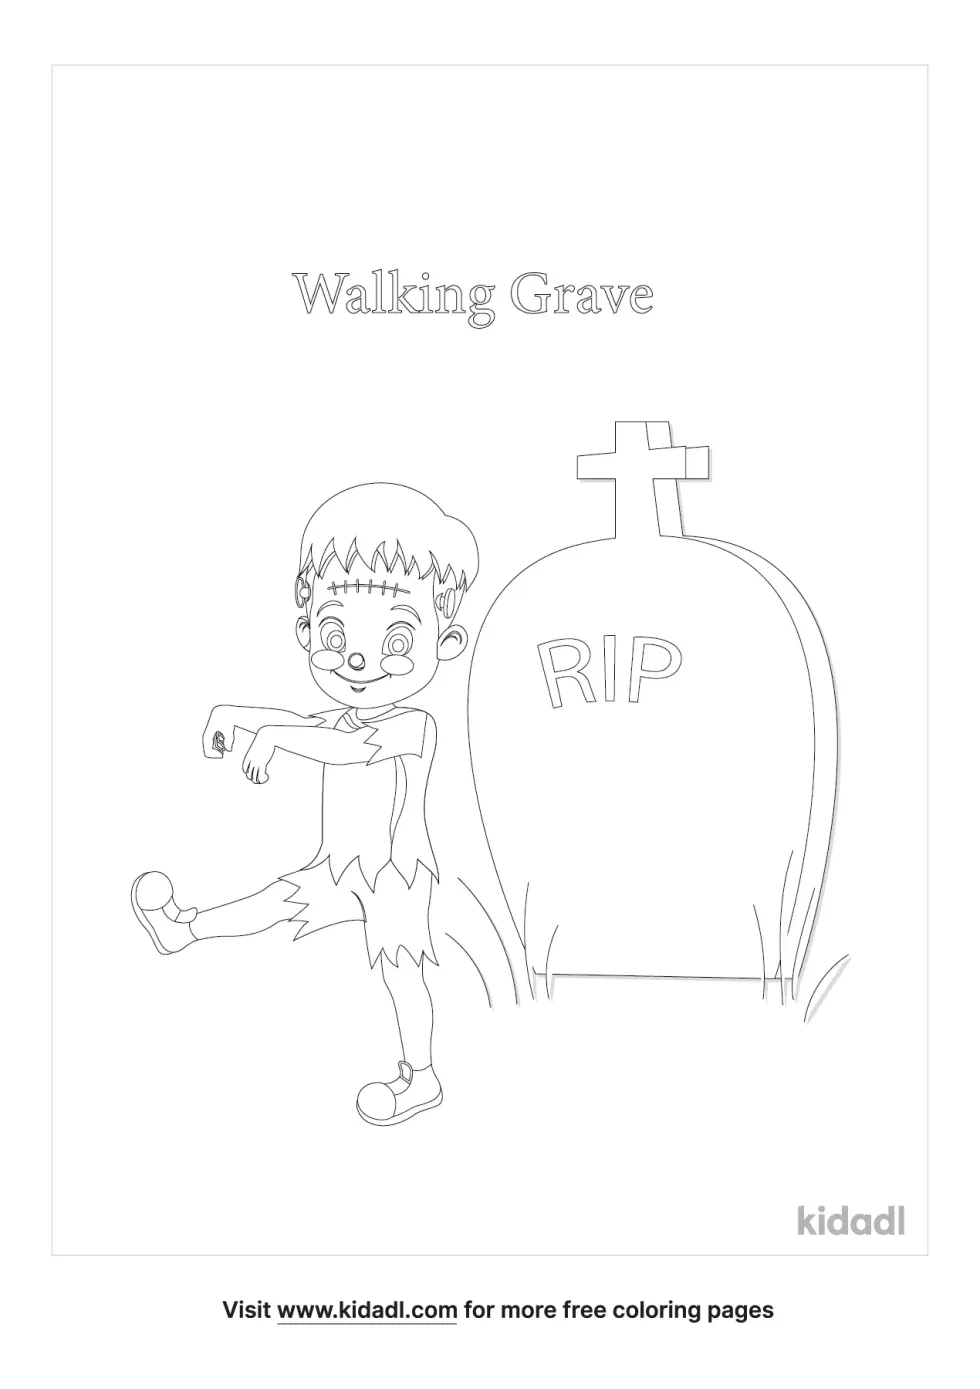 Walking Grave